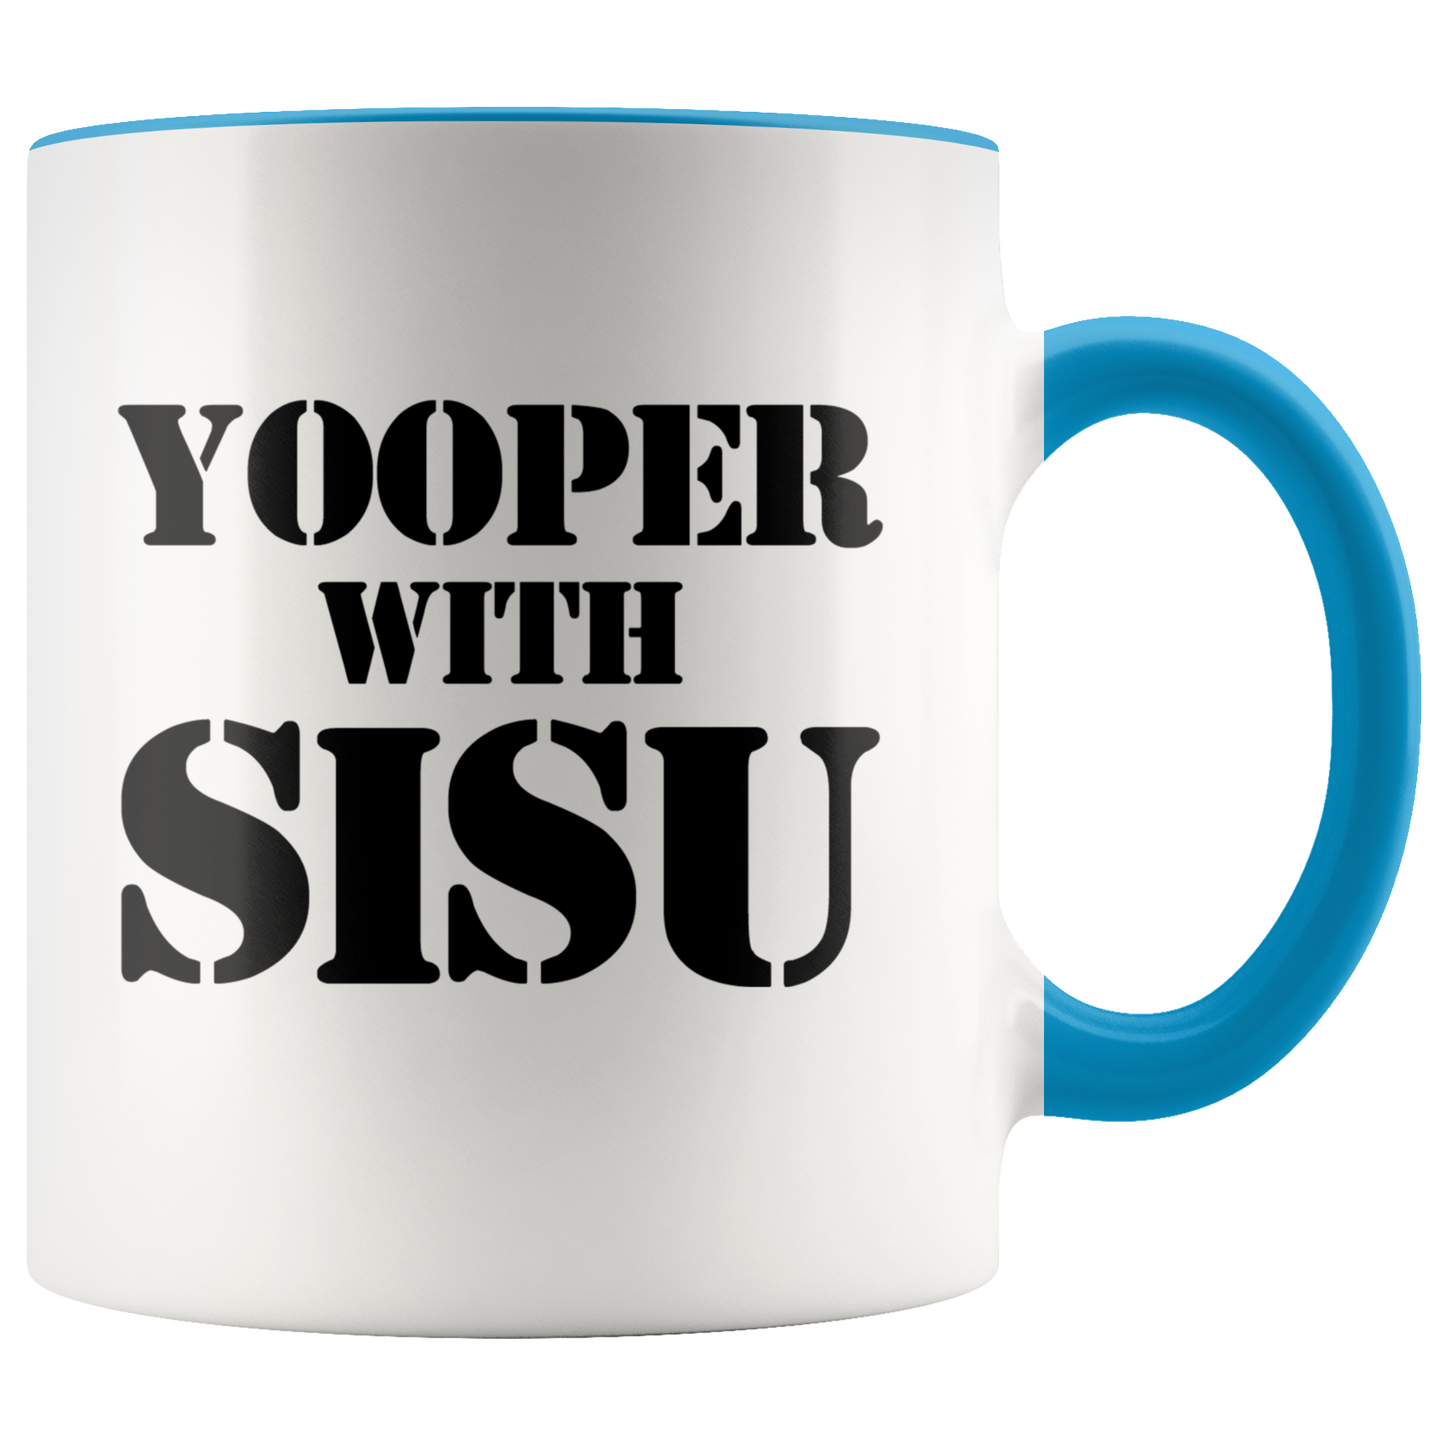 Yooper with Sisu Mug | Finnish Gift | Upper Michigan Residents